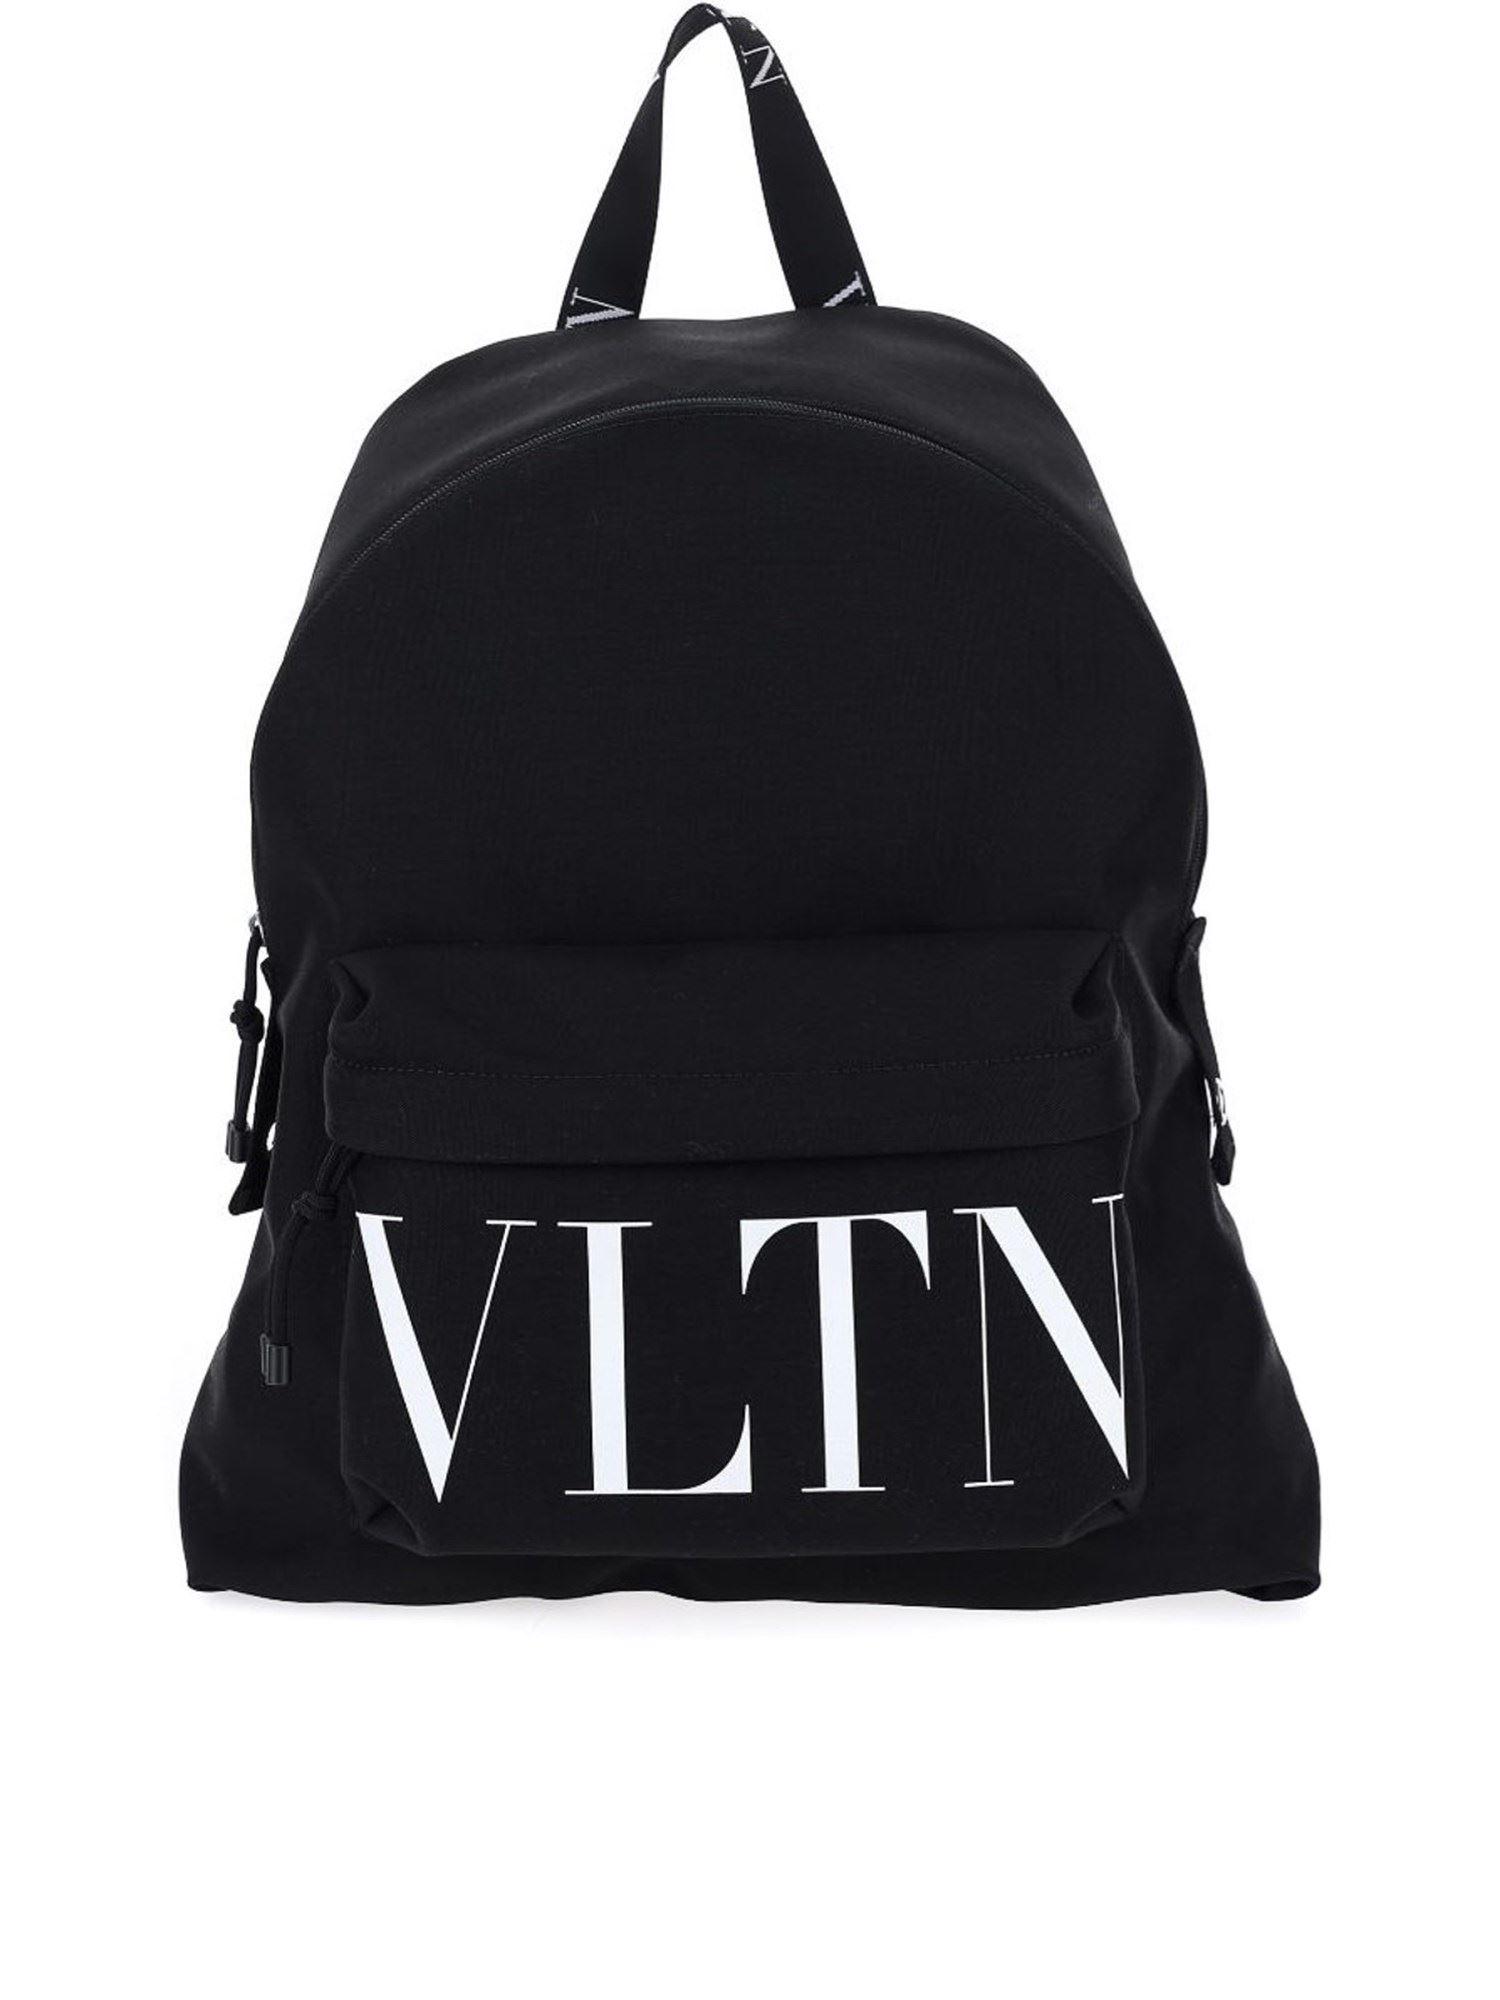 Valentino Synthetic Vltn Backpack in Black for Men - Lyst